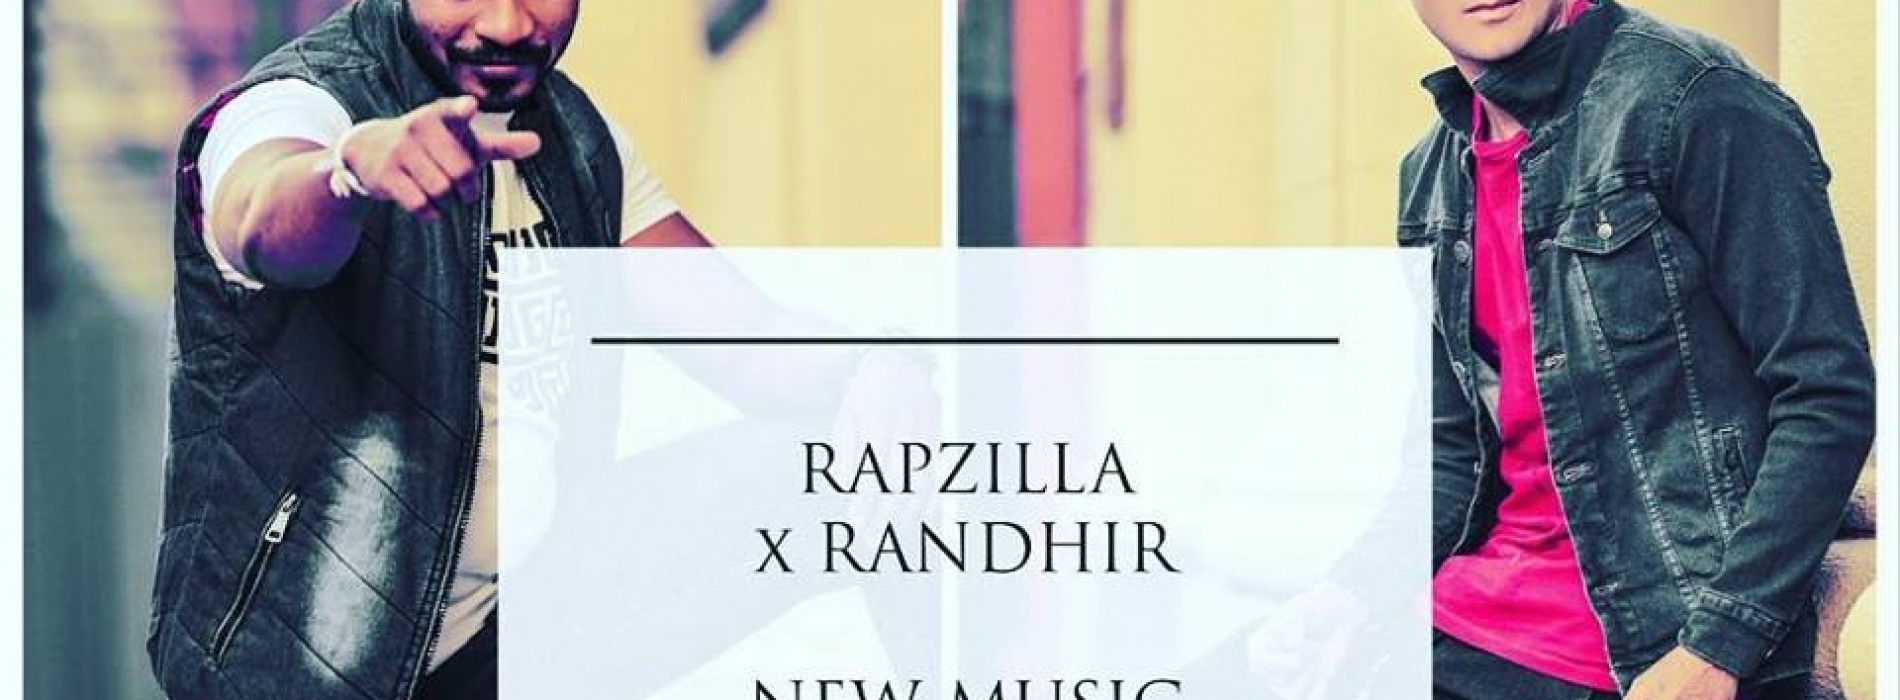 RapZilla & Randhir Have Collaborated